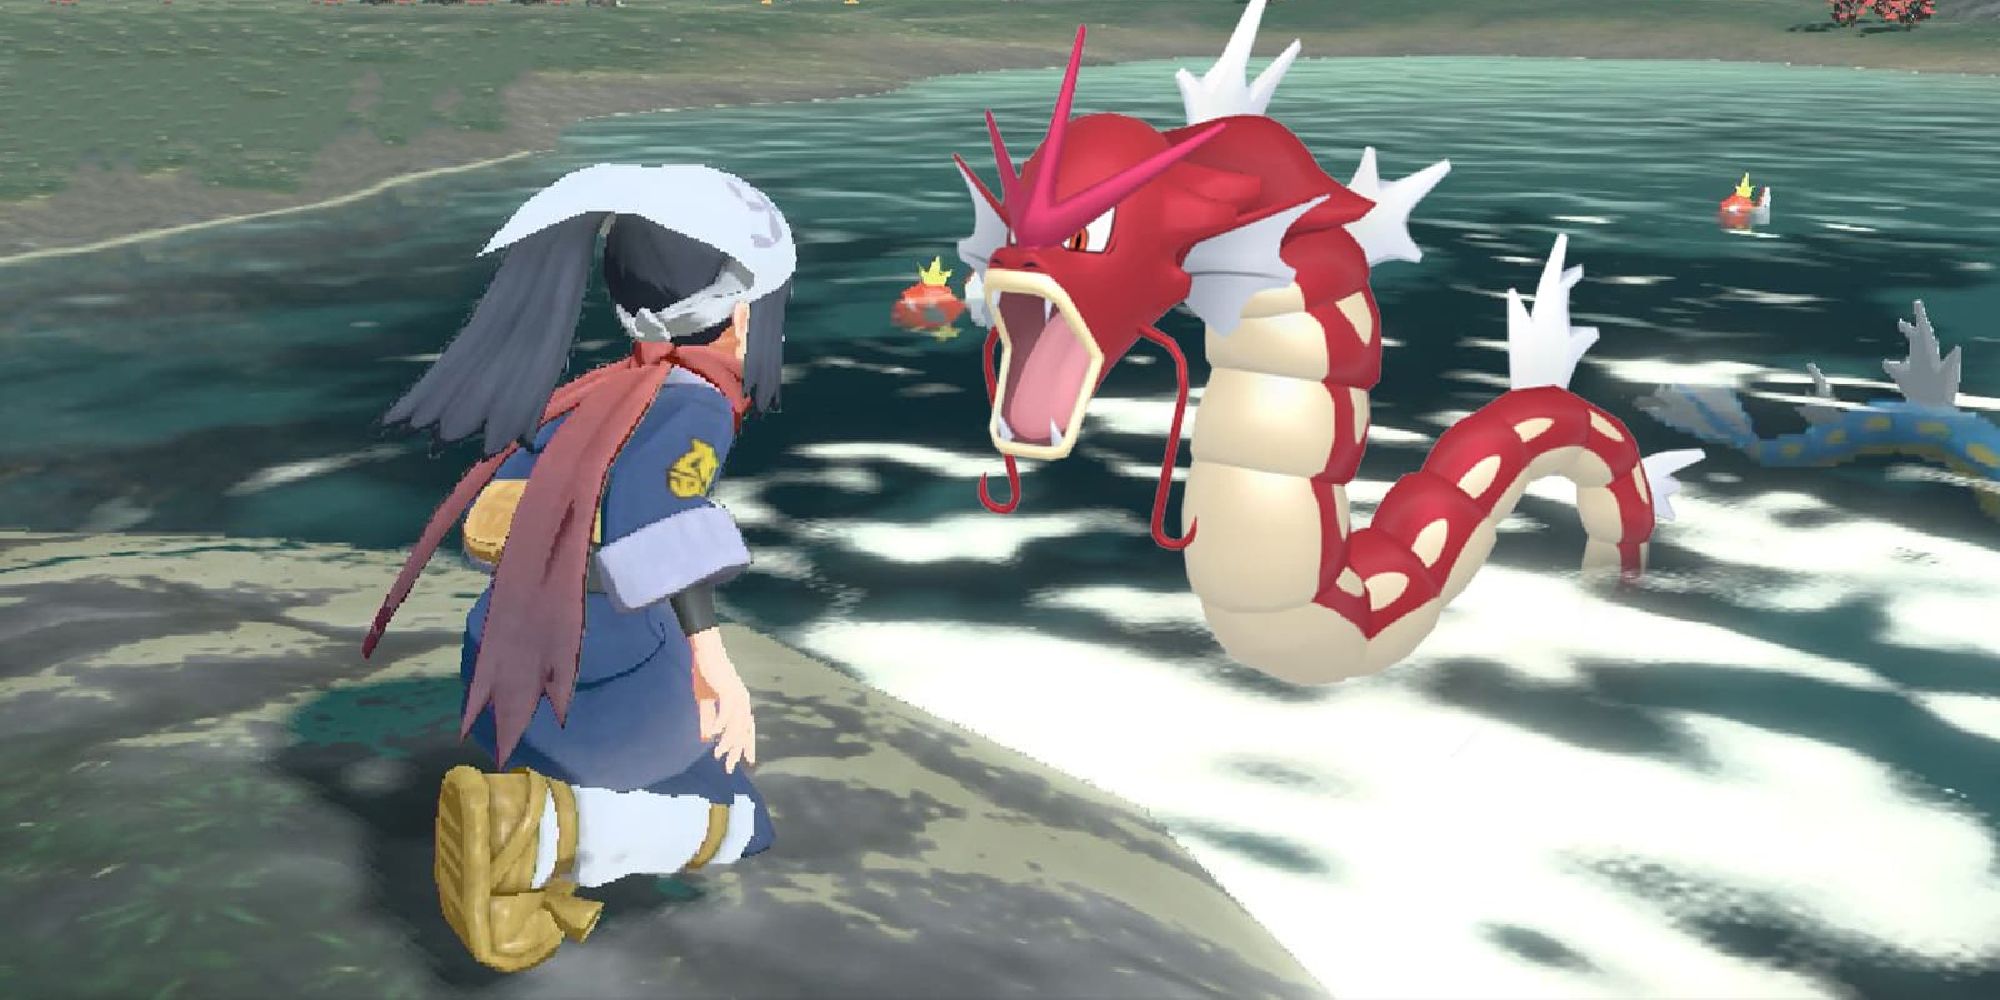 Anubis on X: Shiny hunters will enjoy Pokémon Legends: Arceus